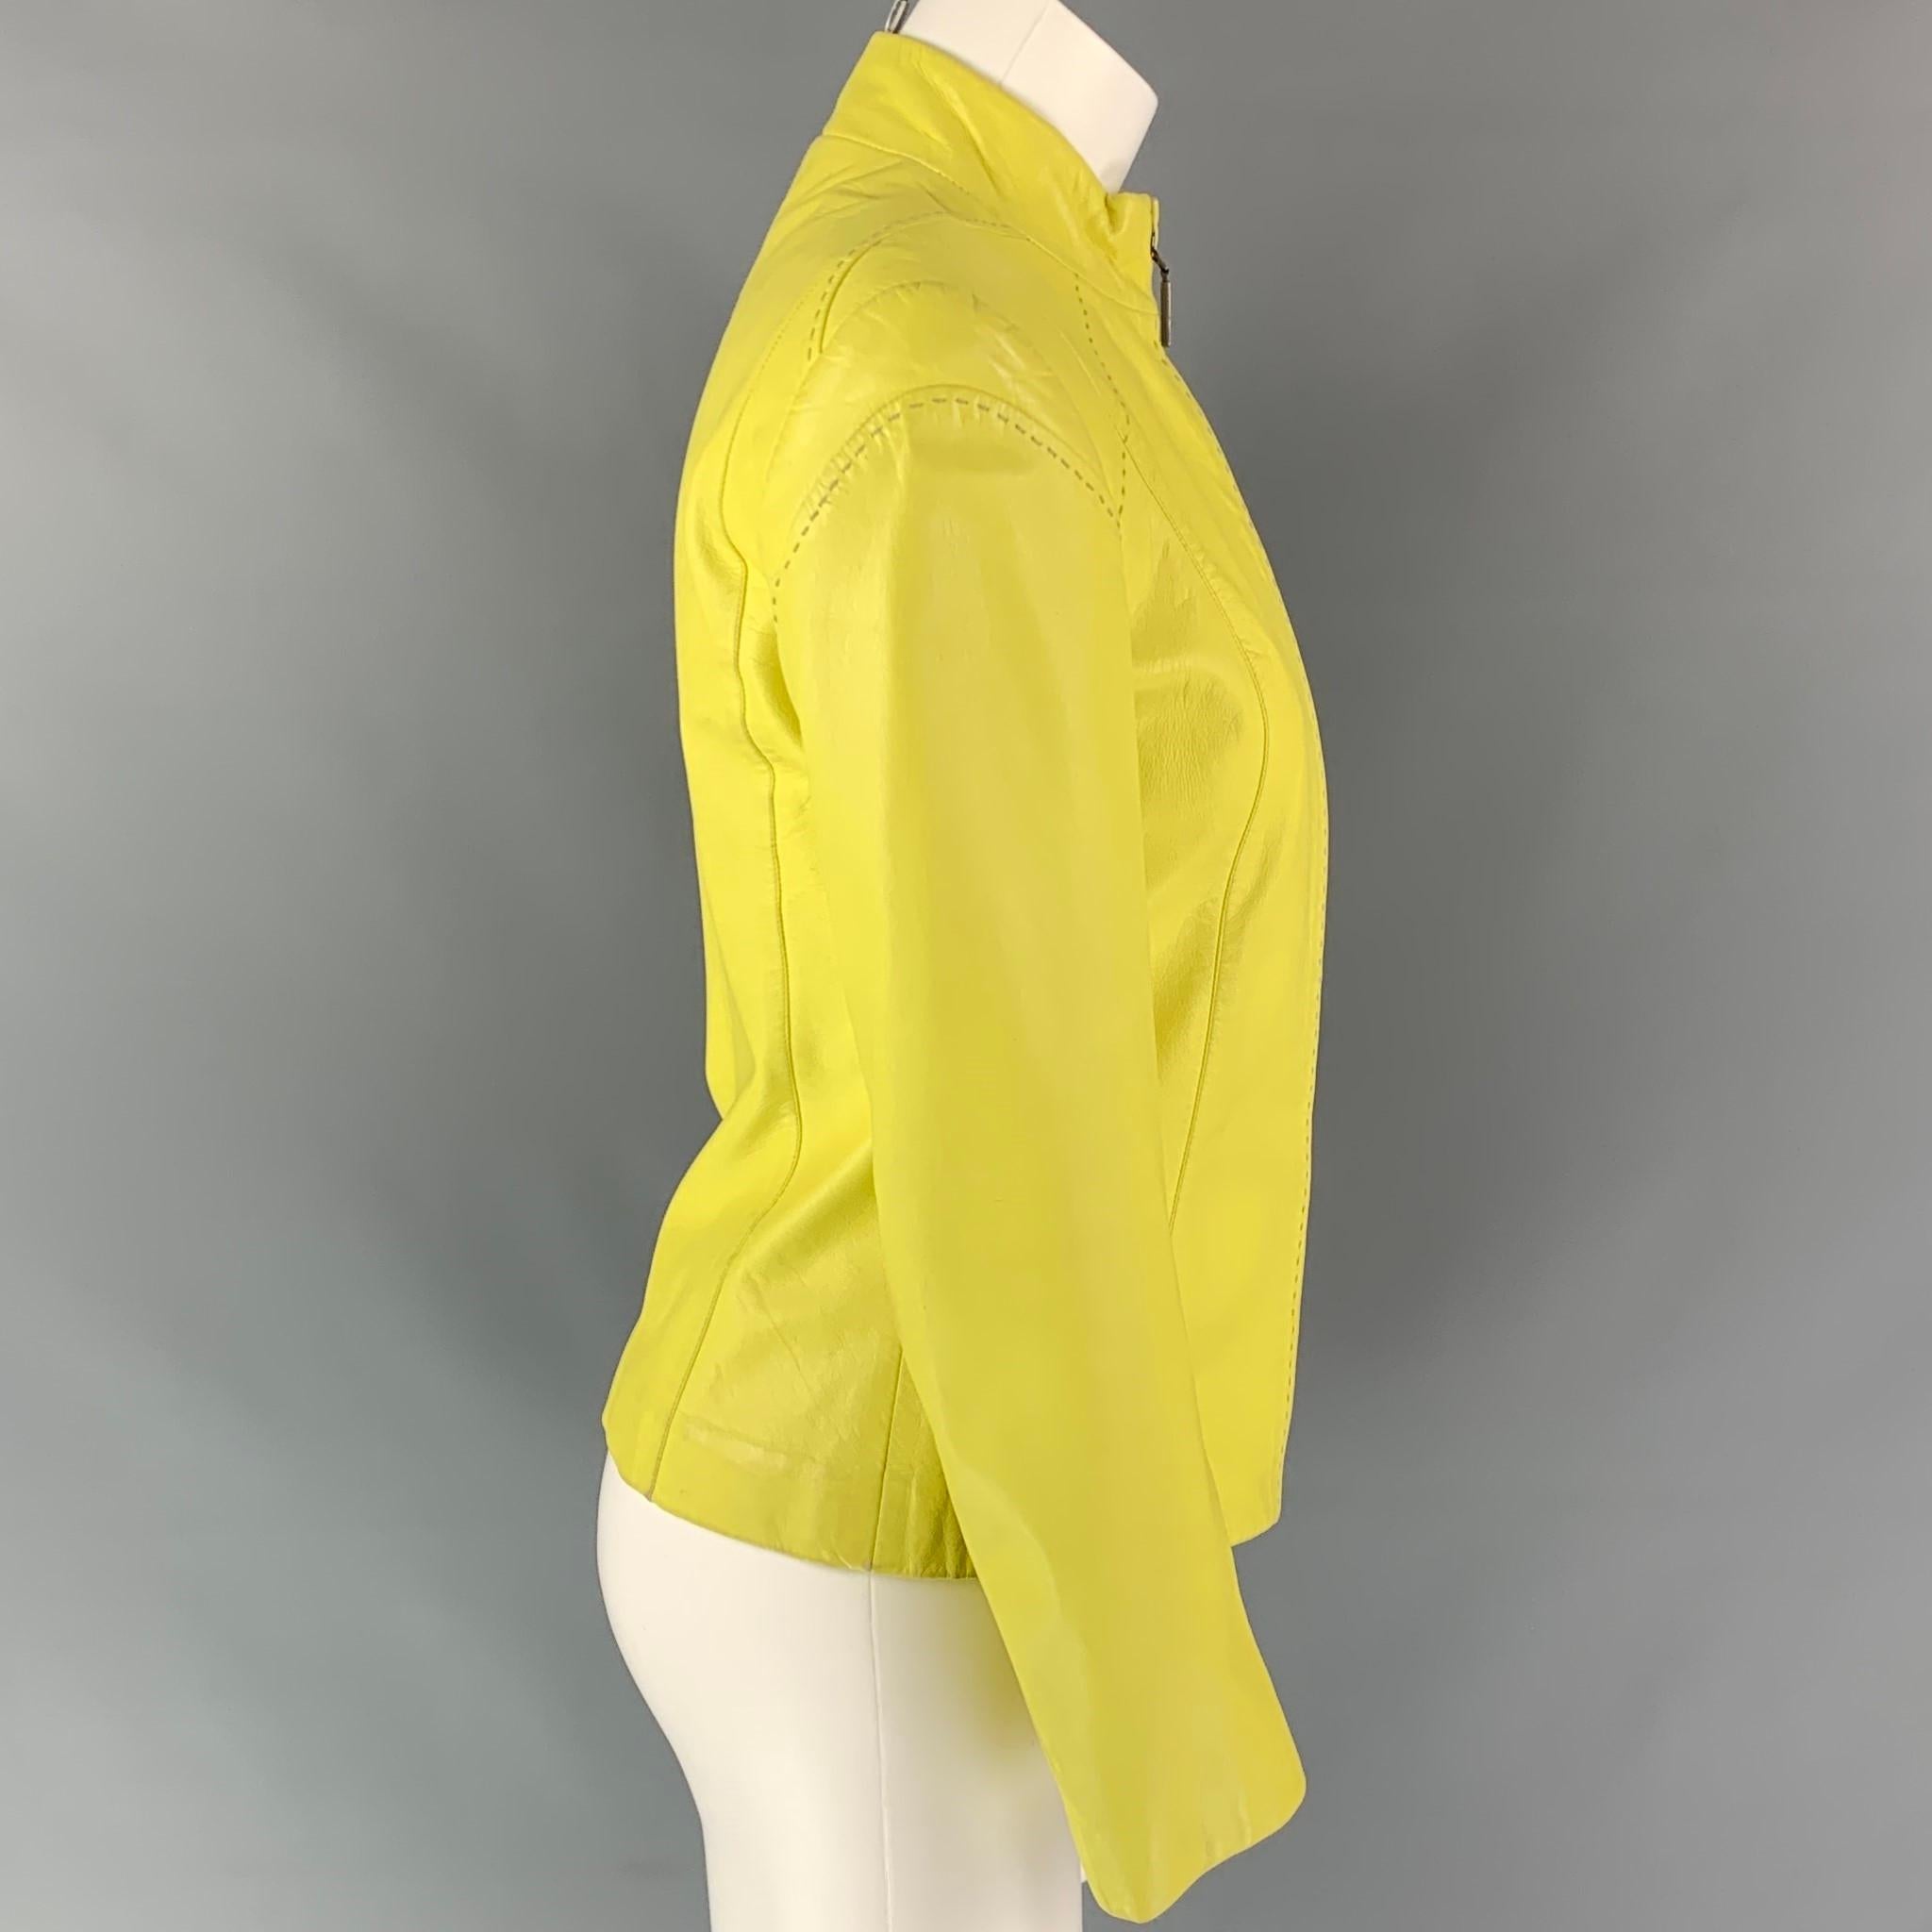 vintage yellow leather jacket